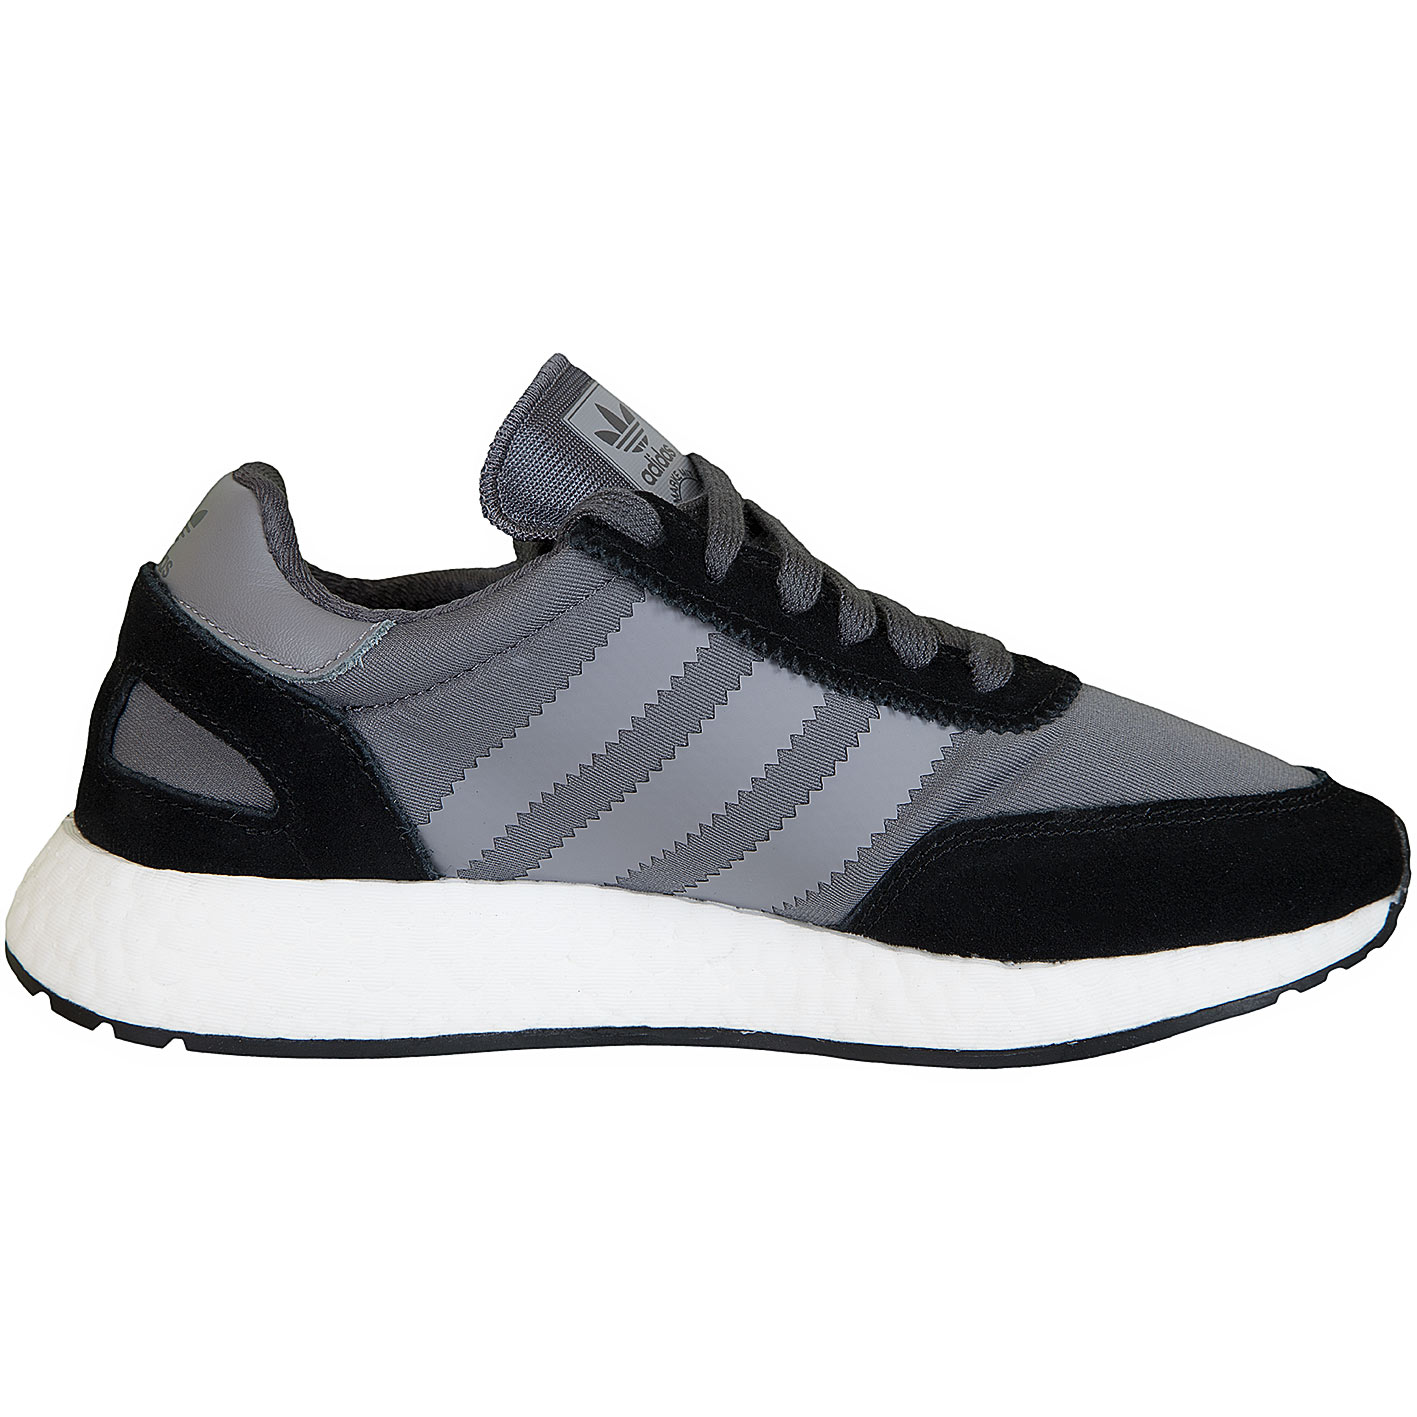 ☆ Adidas Originals Damen Sneaker I-5923 schwarz/grau - hier bestellen!